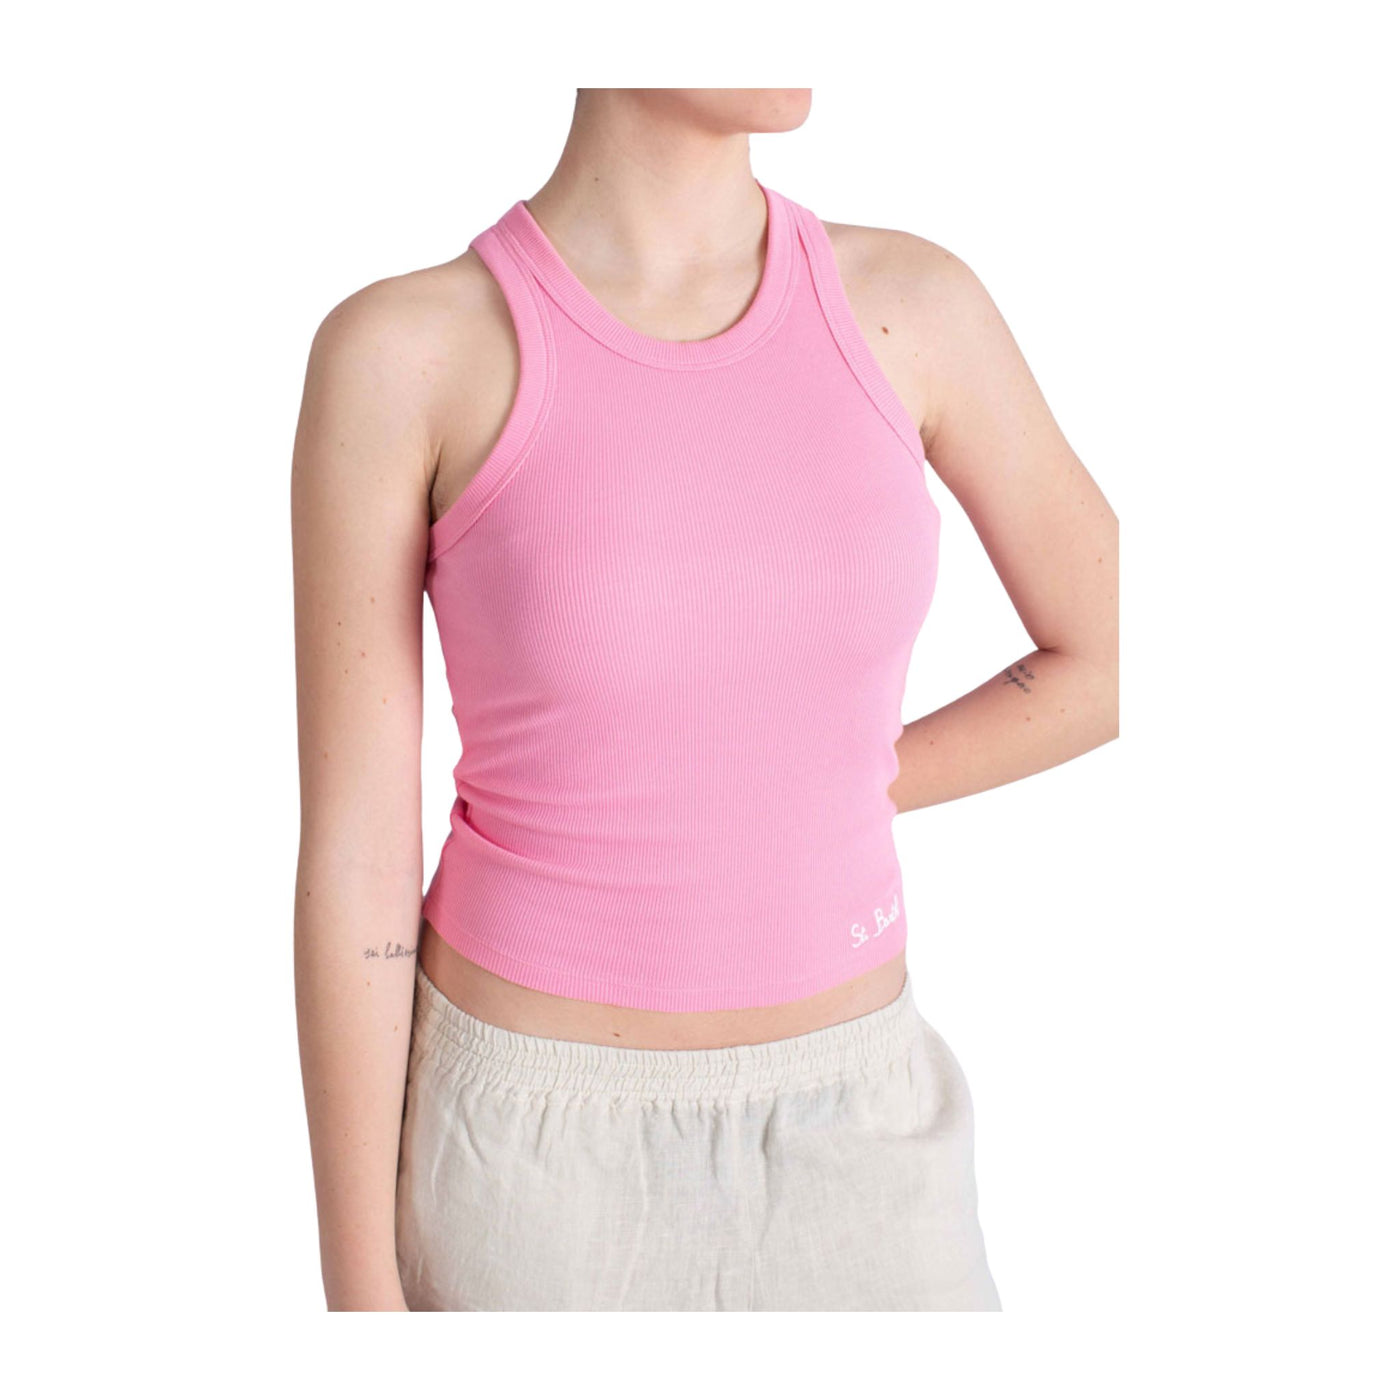 Women's pink ribbed tank top